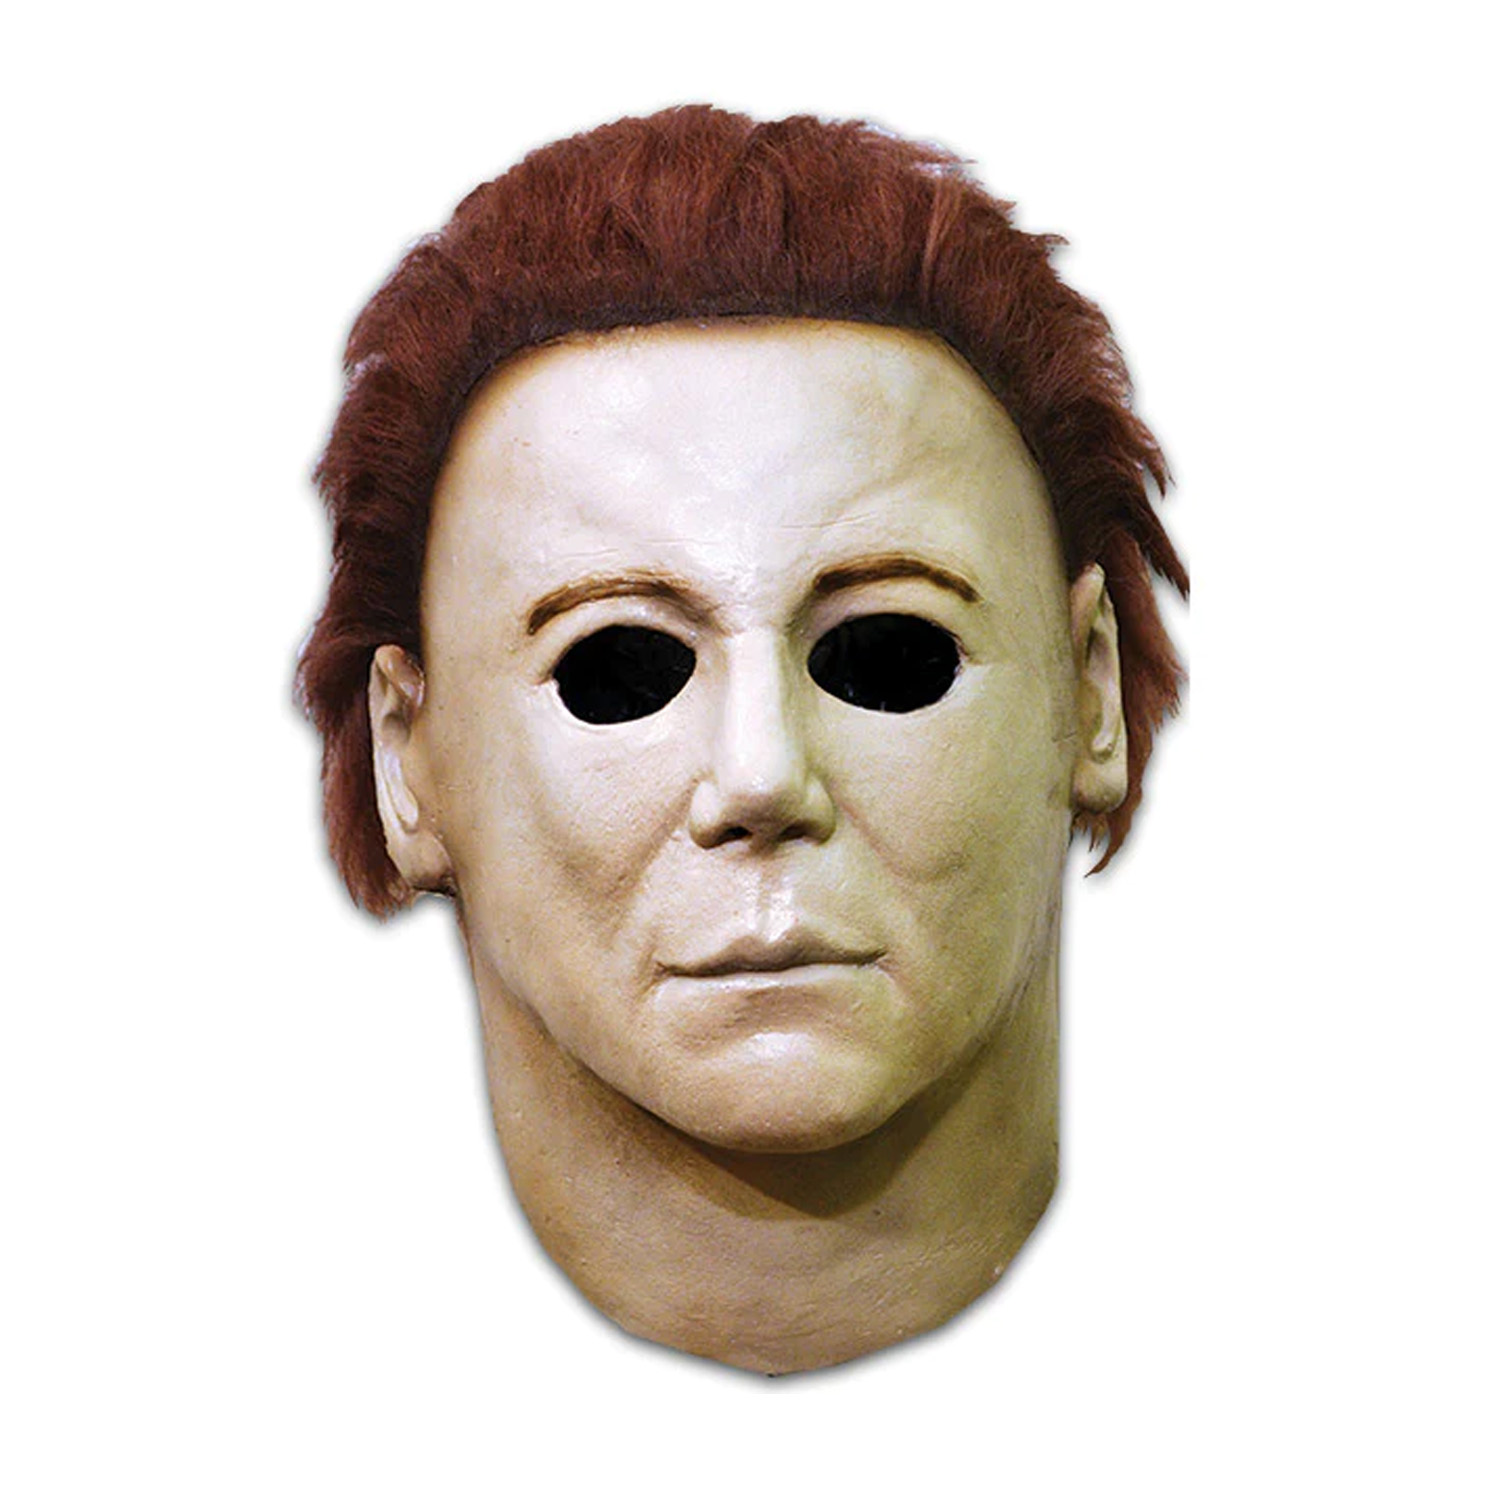 Halloween H20 - Michael Myers Mask